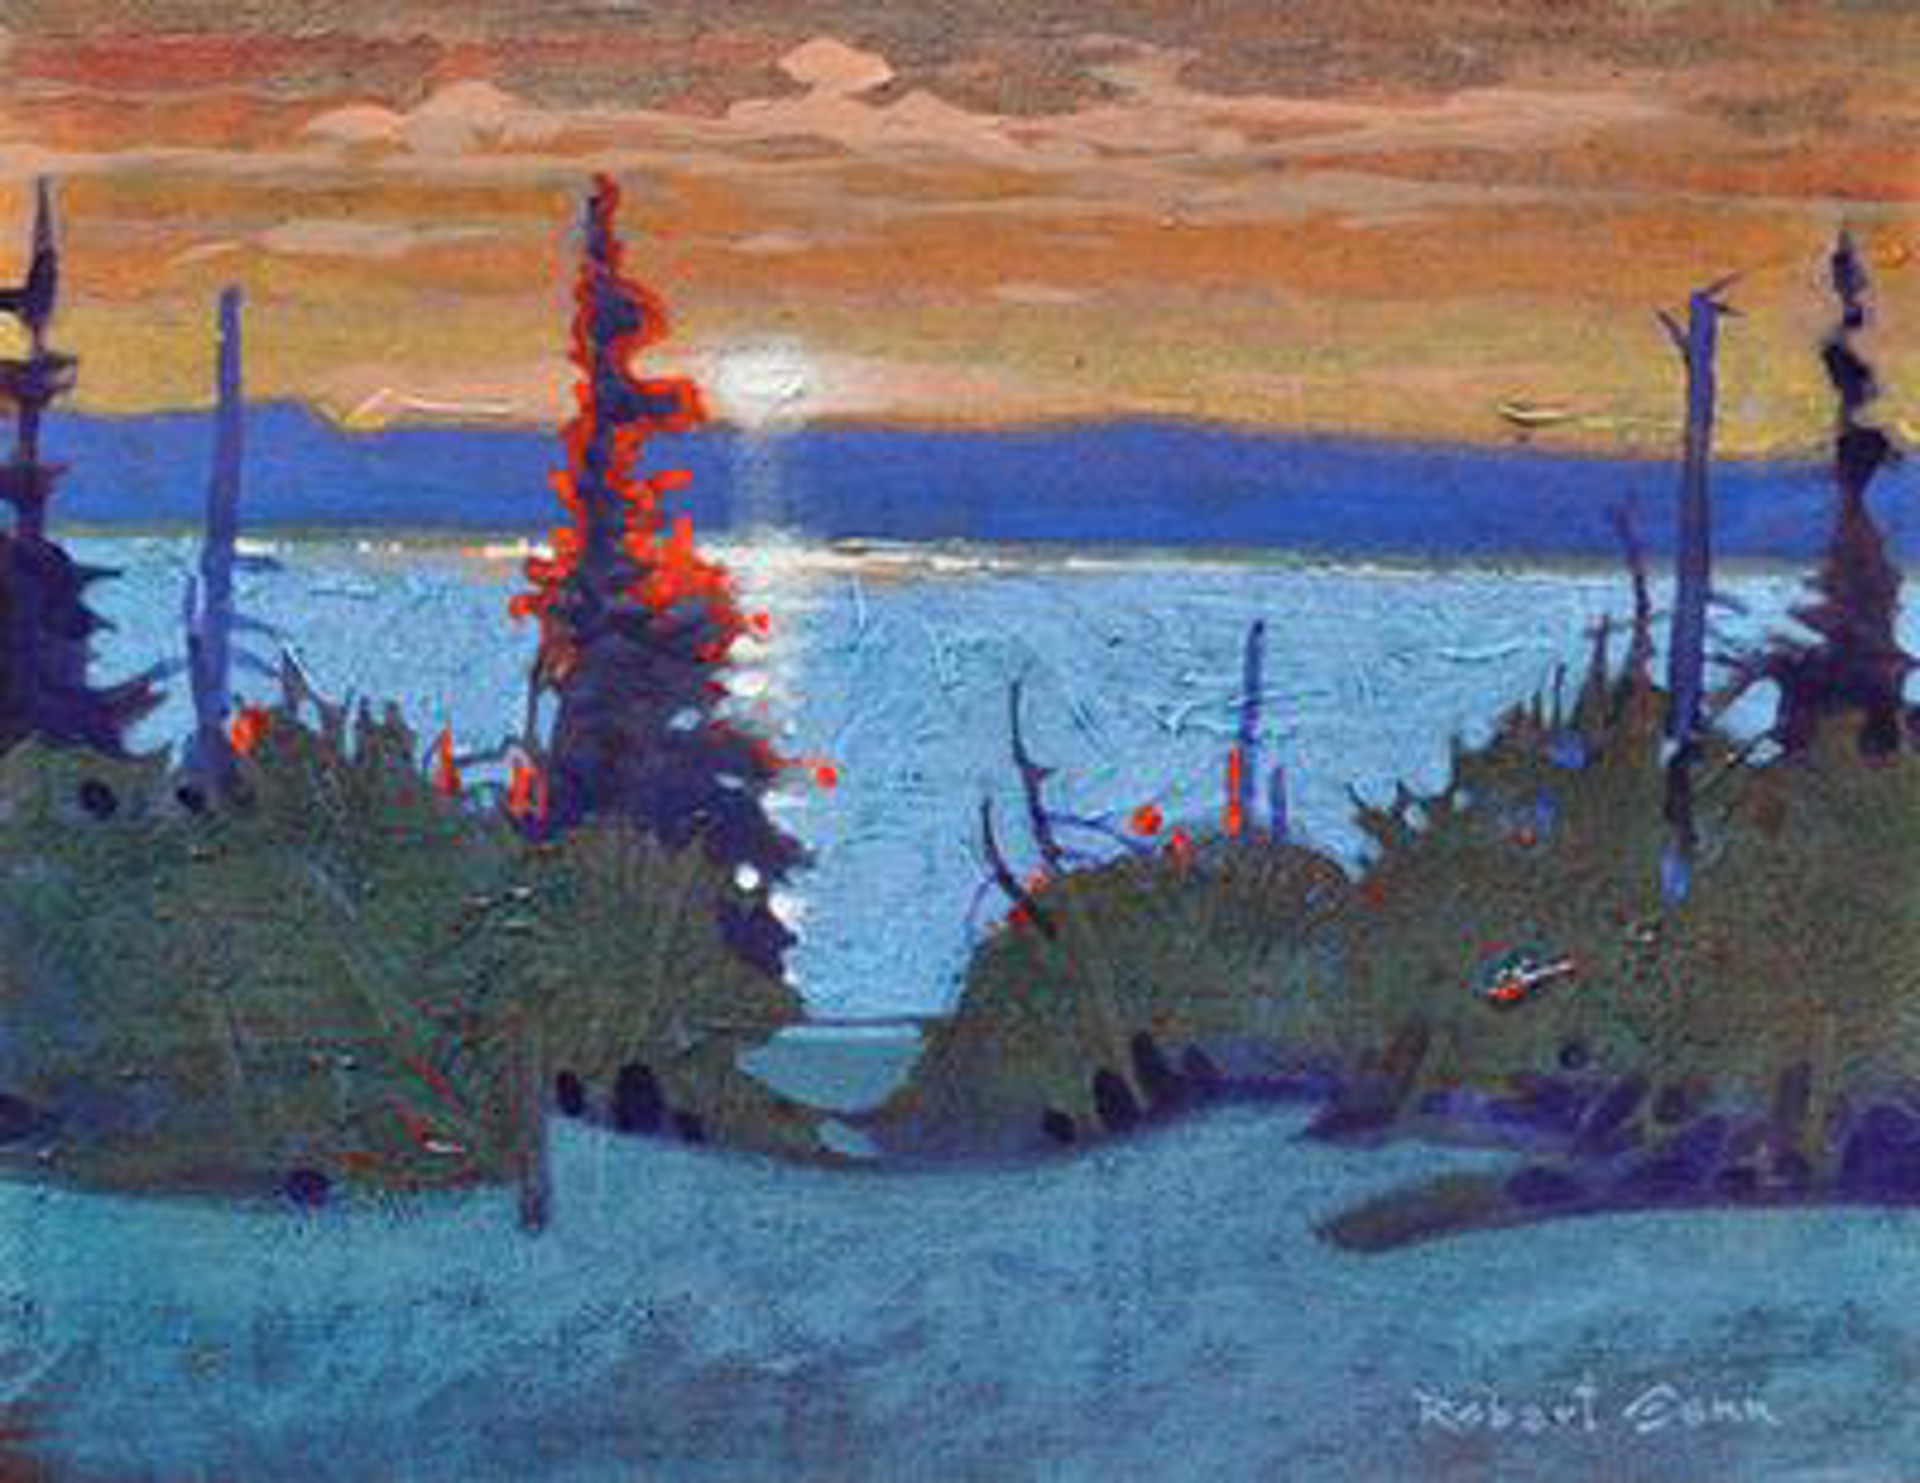 Evening, Pender Island by Robert Genn (1936-2014)